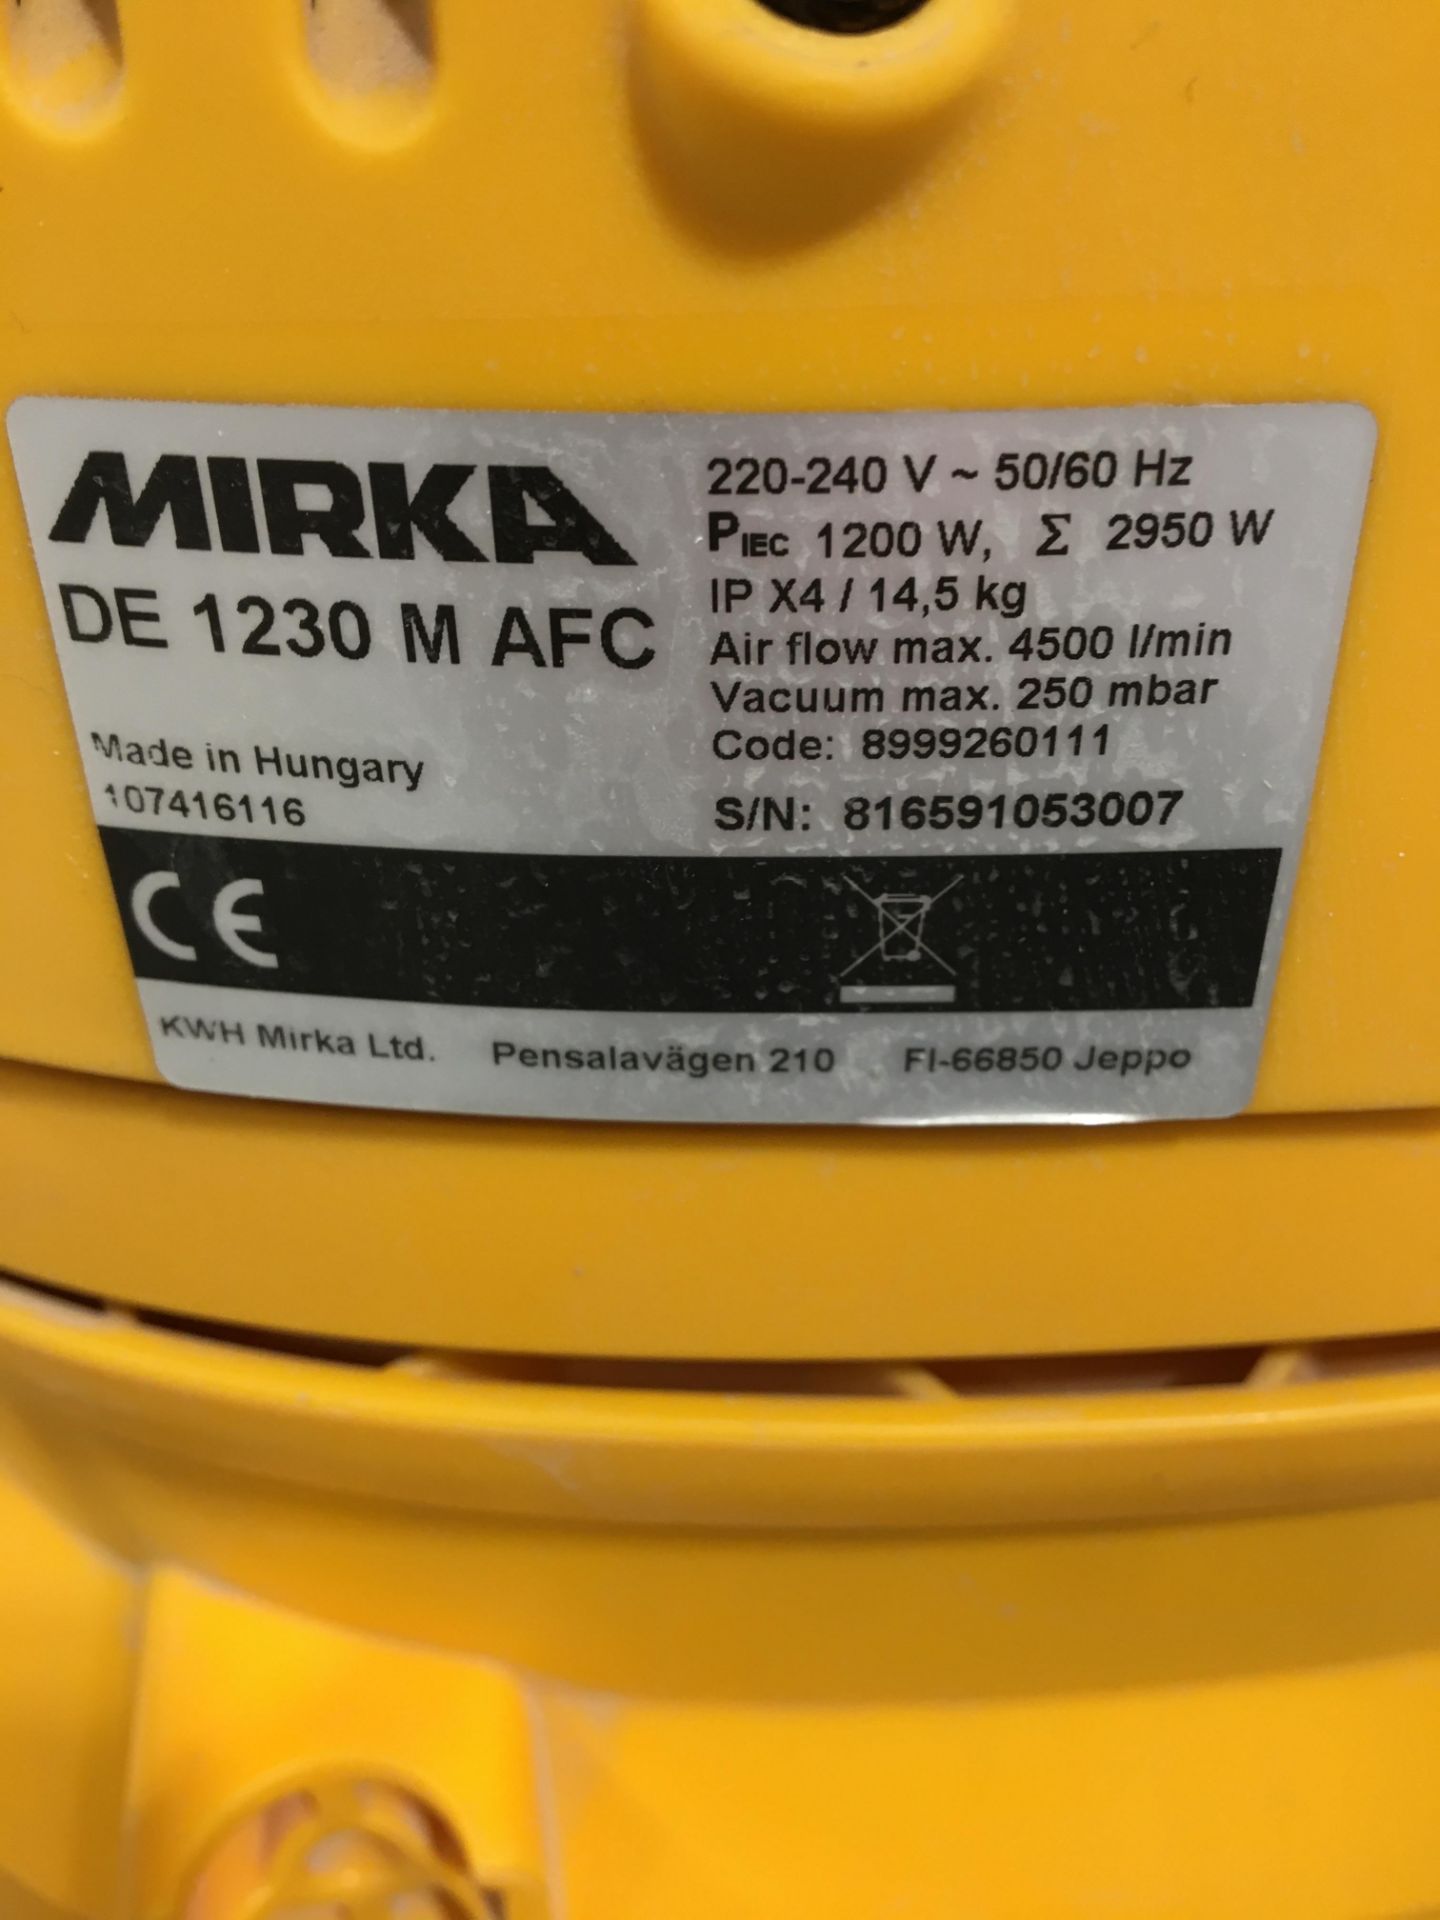 Mirka DE 1230 M AFC mobile dust extraction unit, Serial No. 816591053007 with Mirka Deros 650 - Image 2 of 4